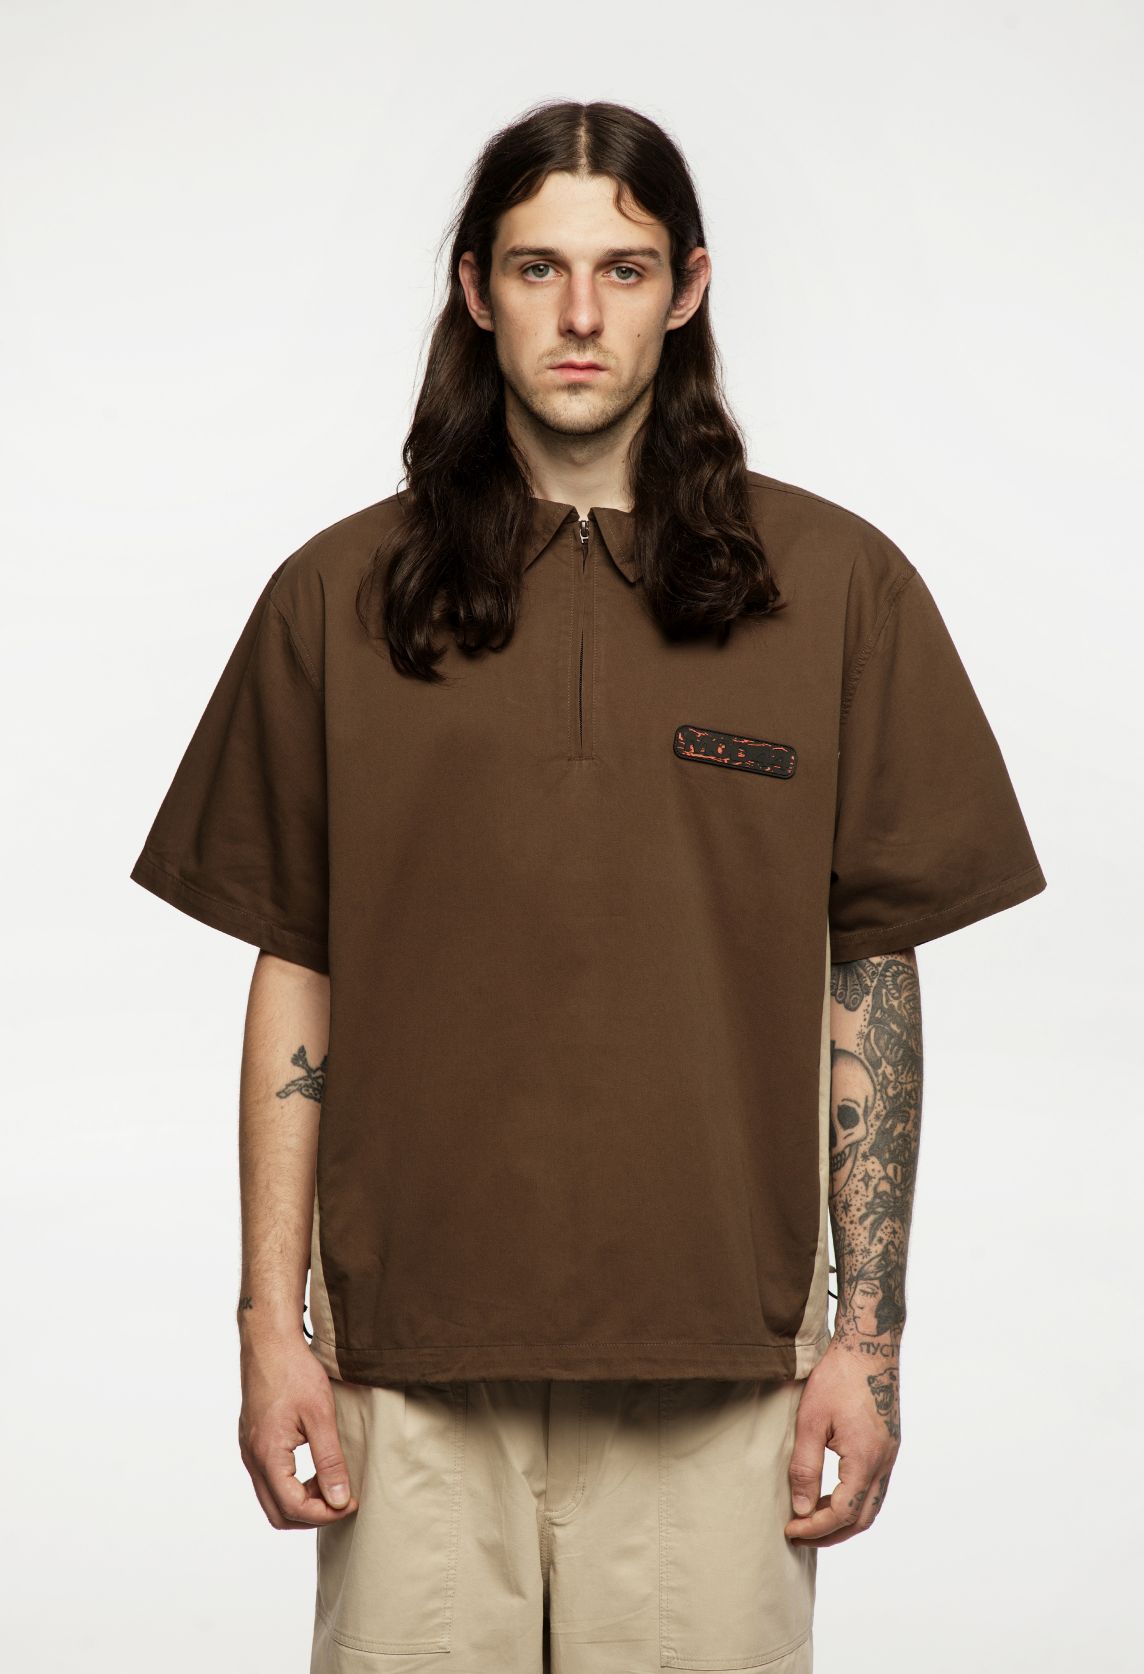 Storekeeper Shirt Brown